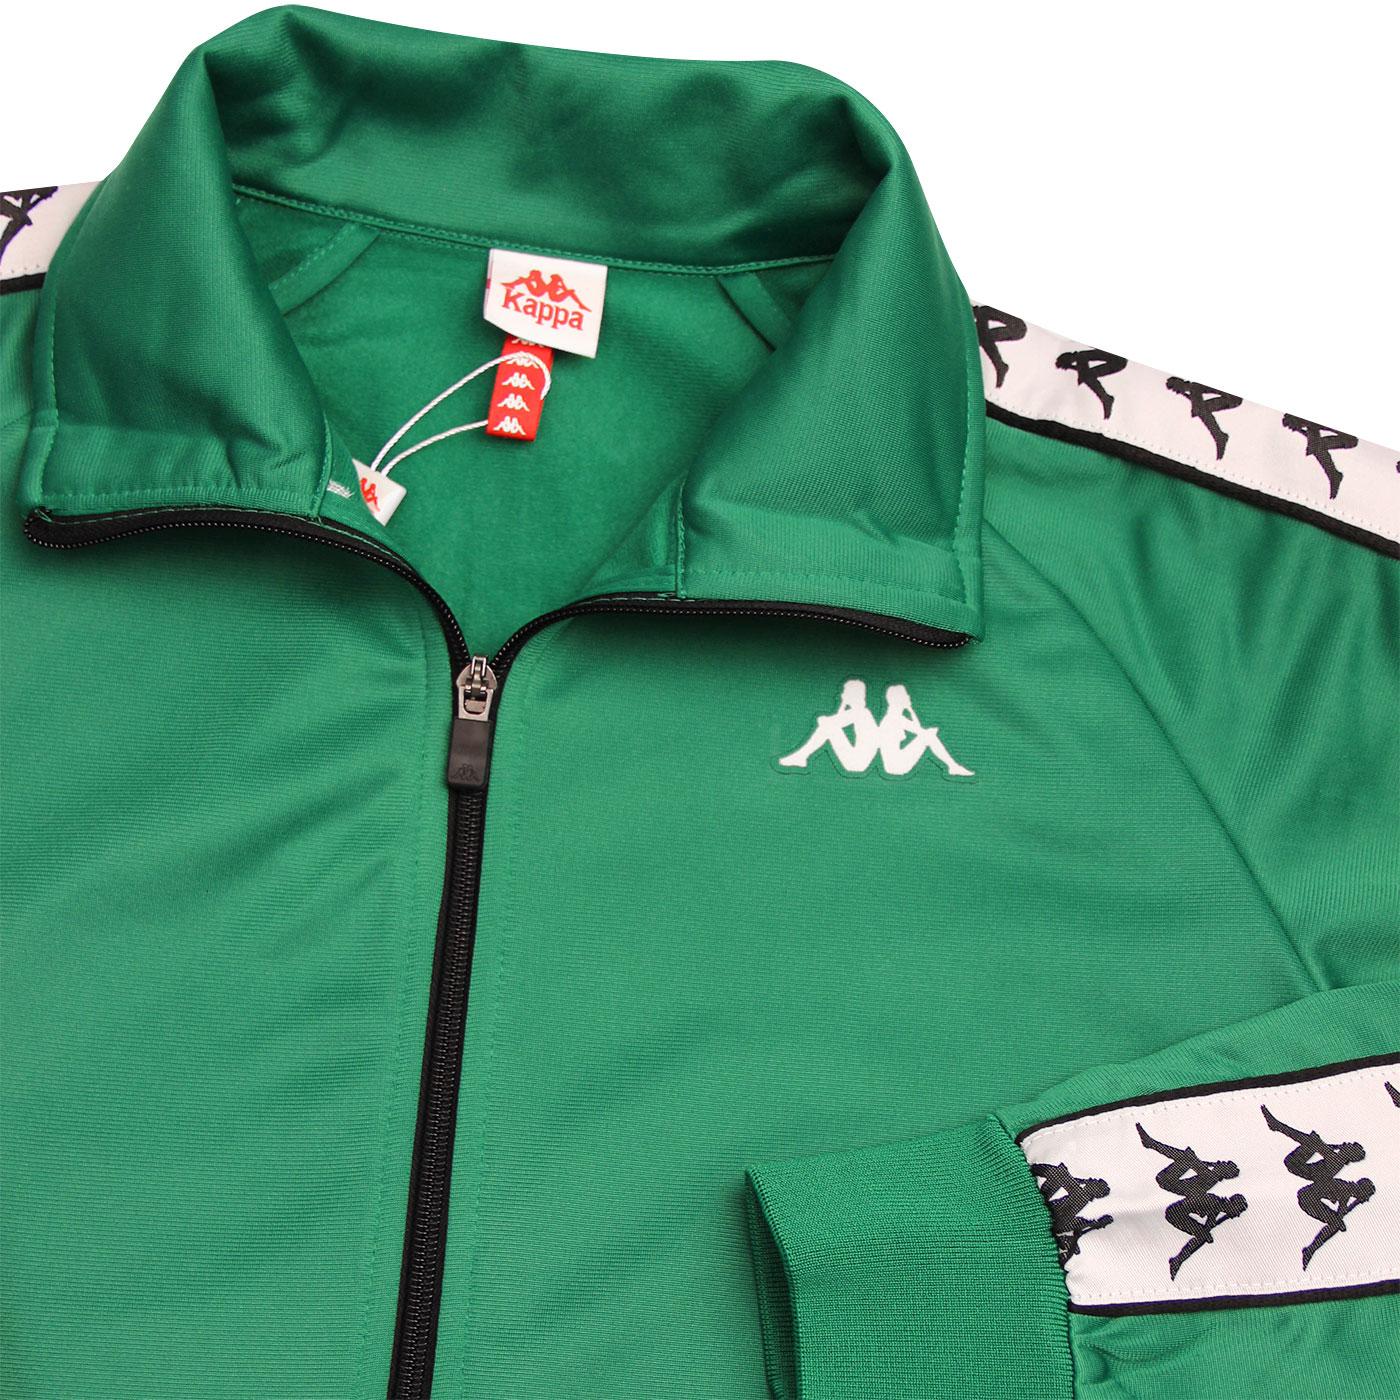 green kappa track jacket